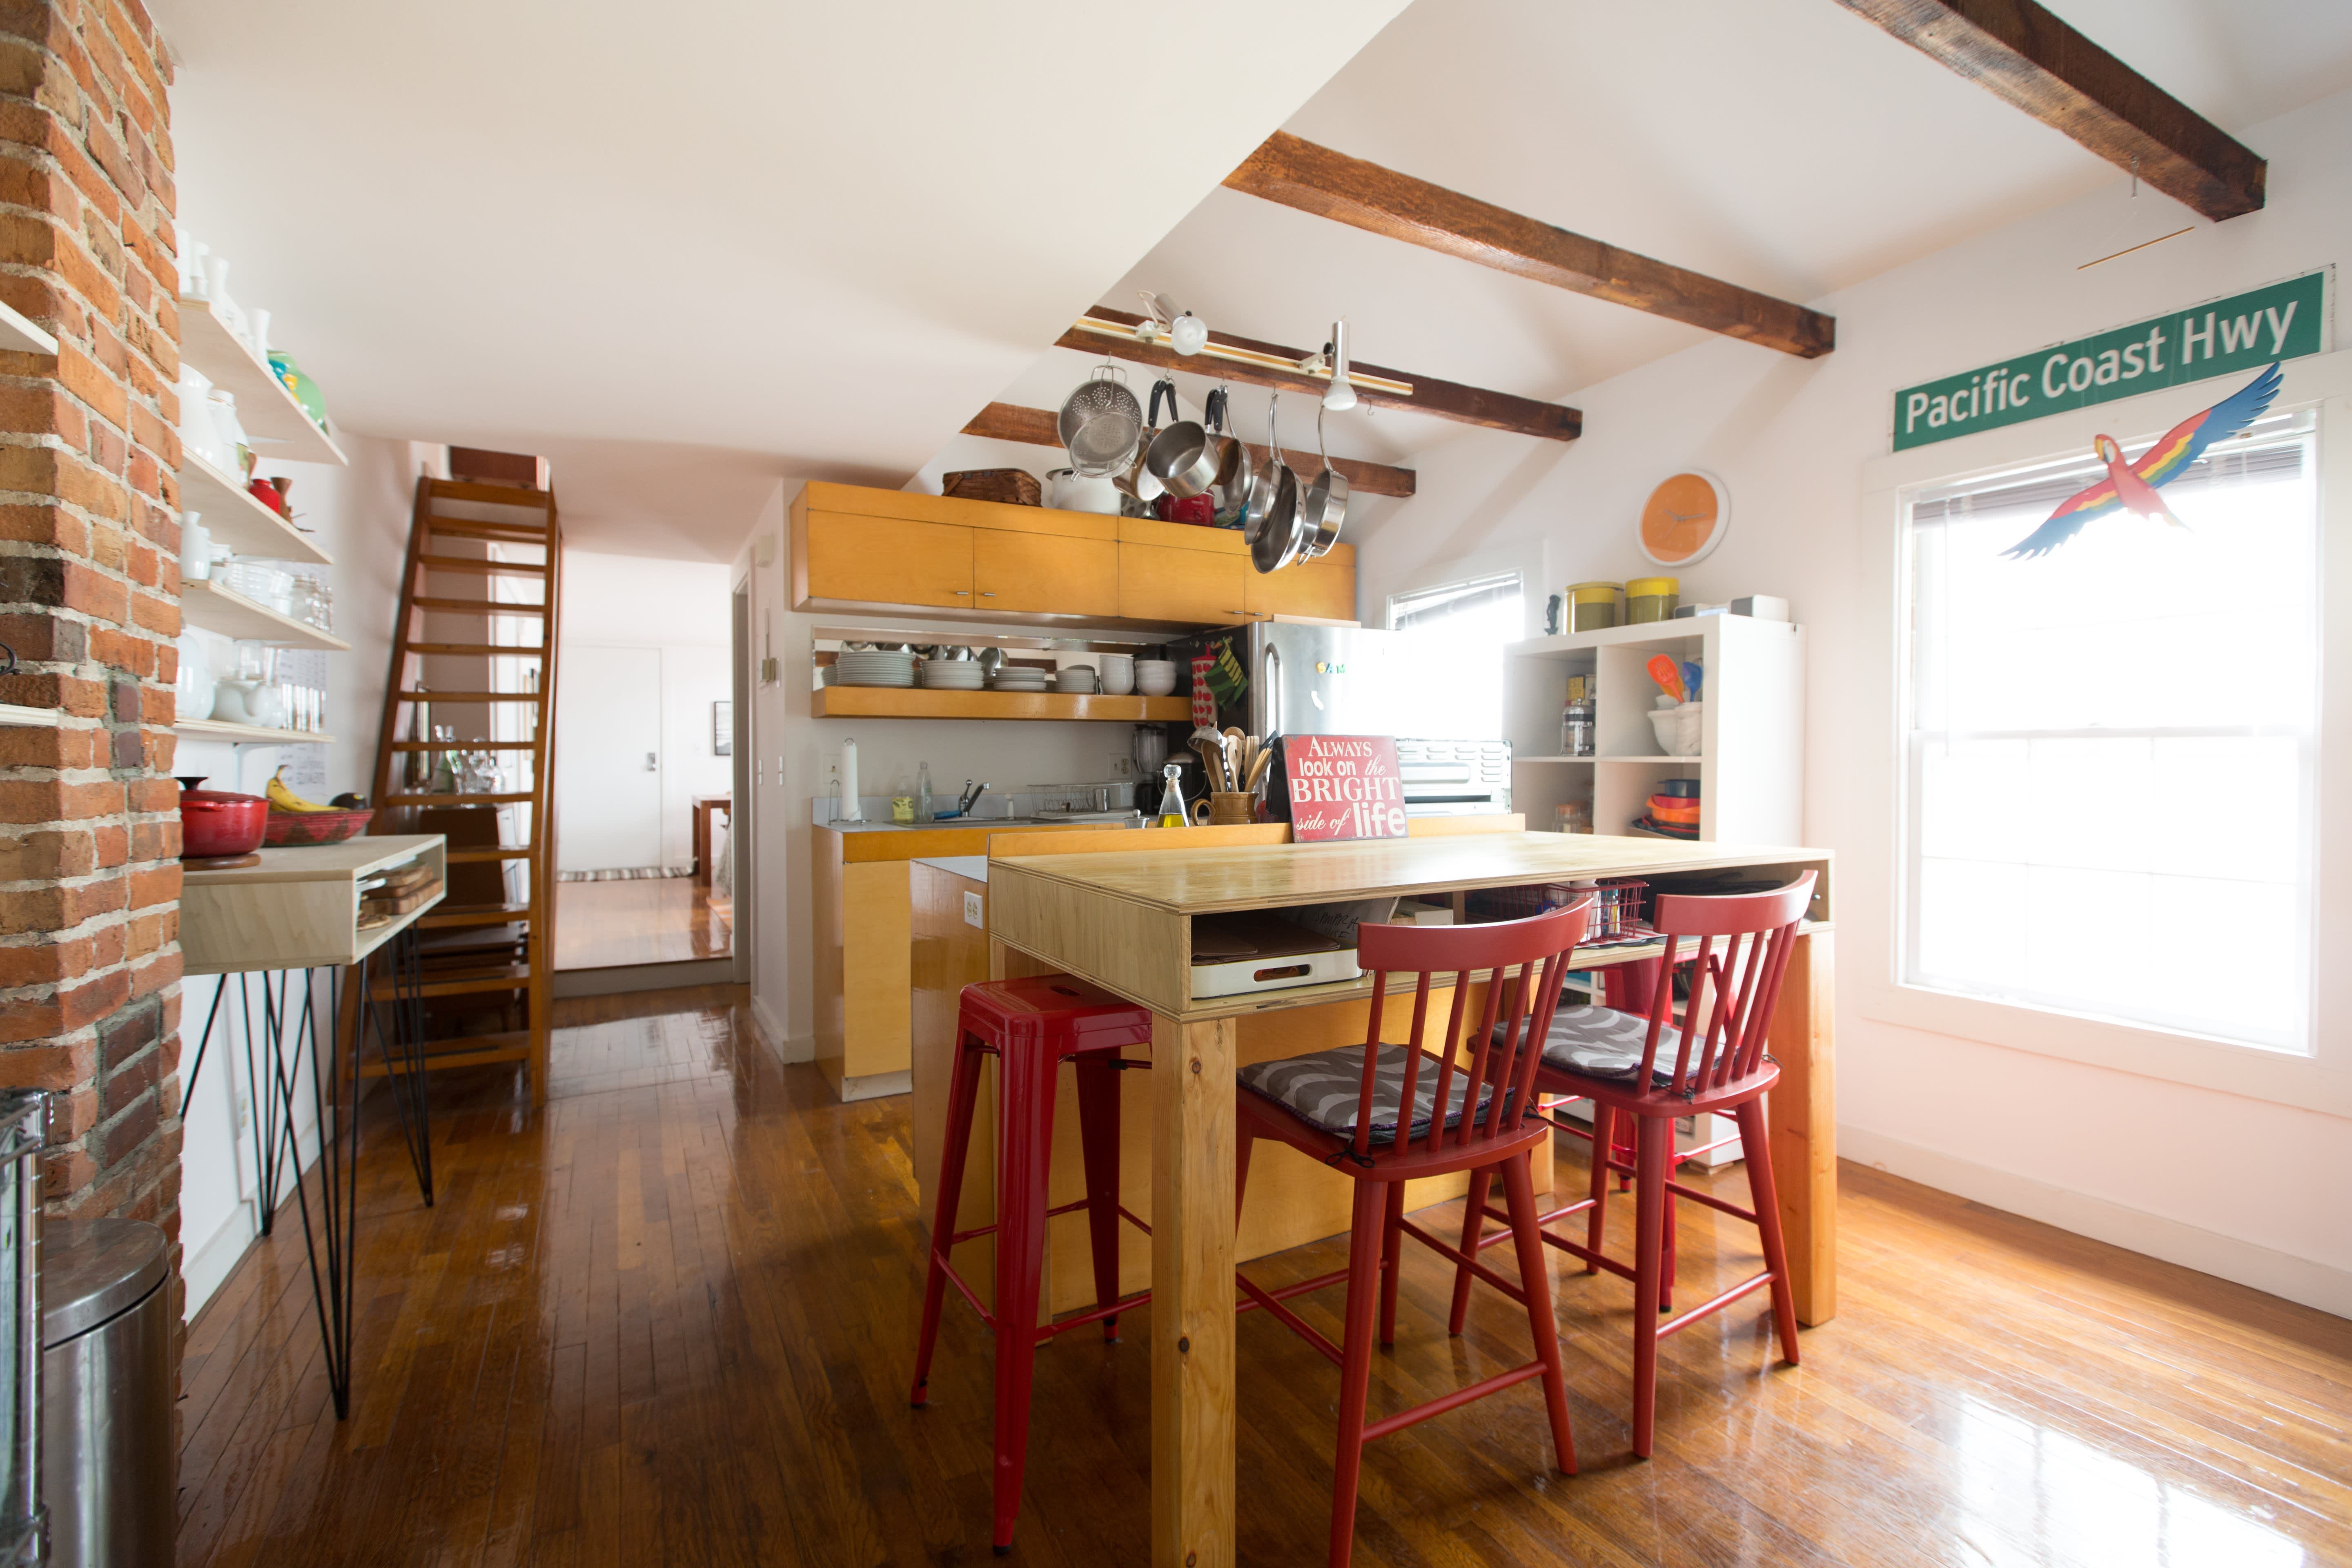 honest review: KitchenAid mini food processor » the practical kitchen